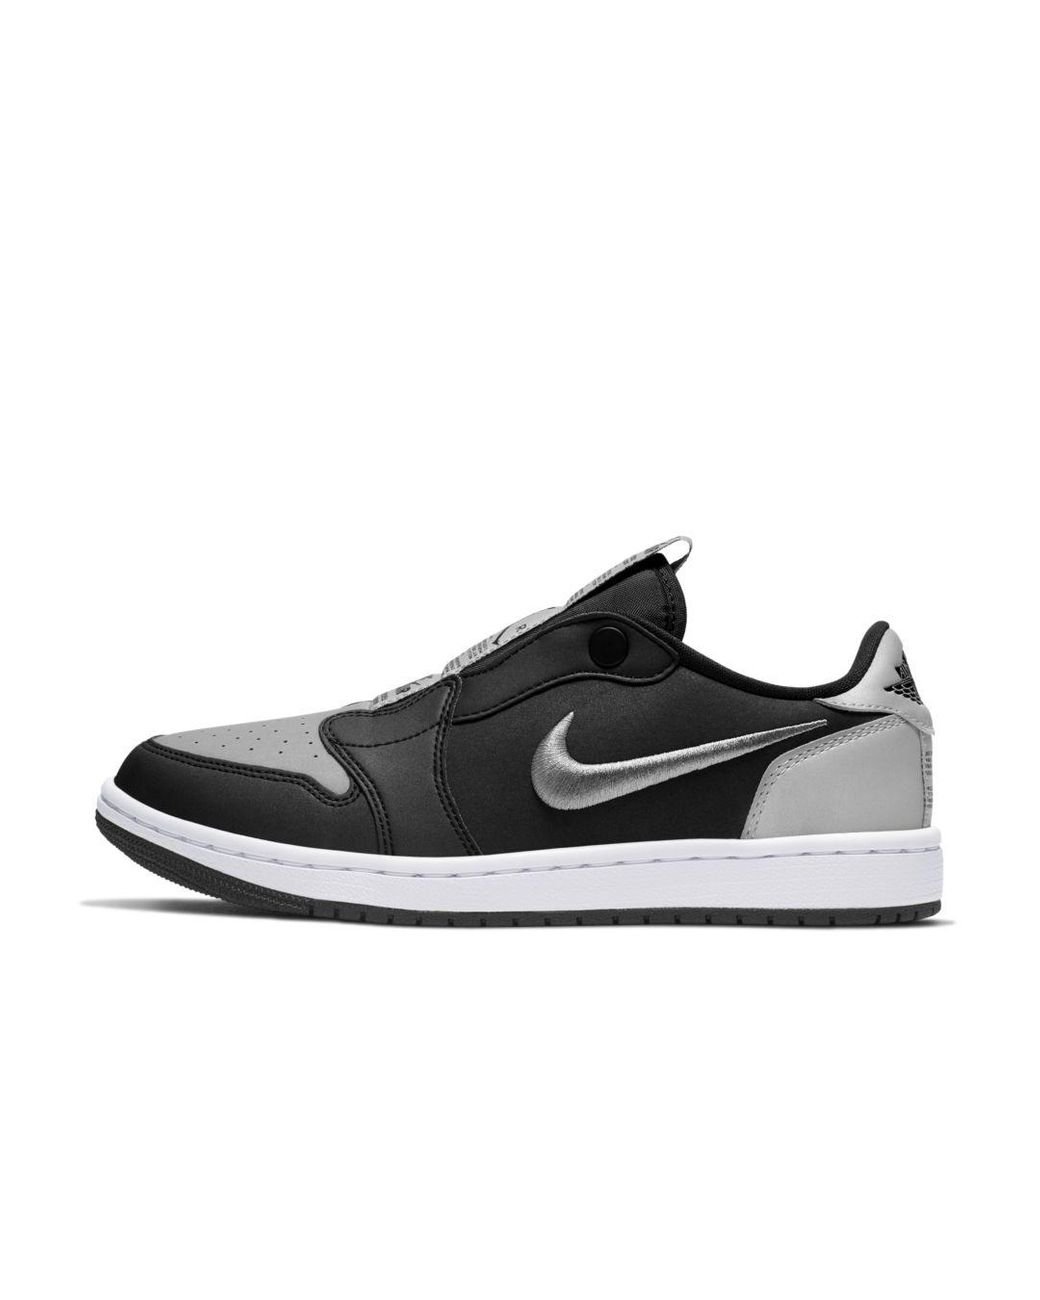 Nike Air Jordan 1 Retro Low Slip Se Sneakers in Black/Grey (Black) | Lyst